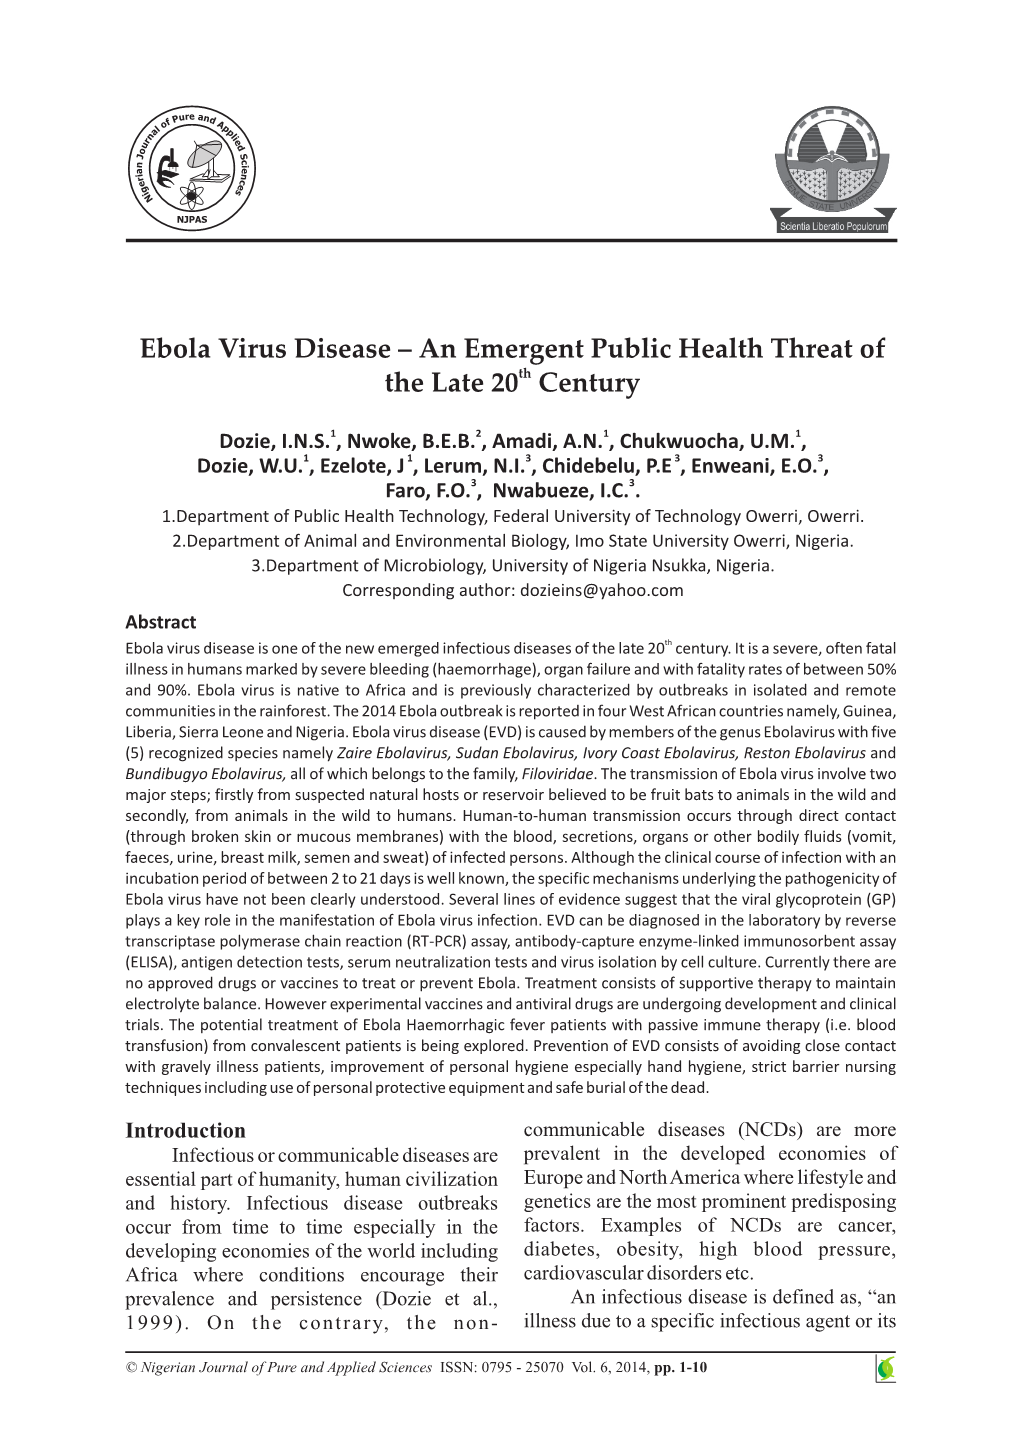 Ebola Virus Disease – an Emergent Public Health Threat of the Late 20Th Century